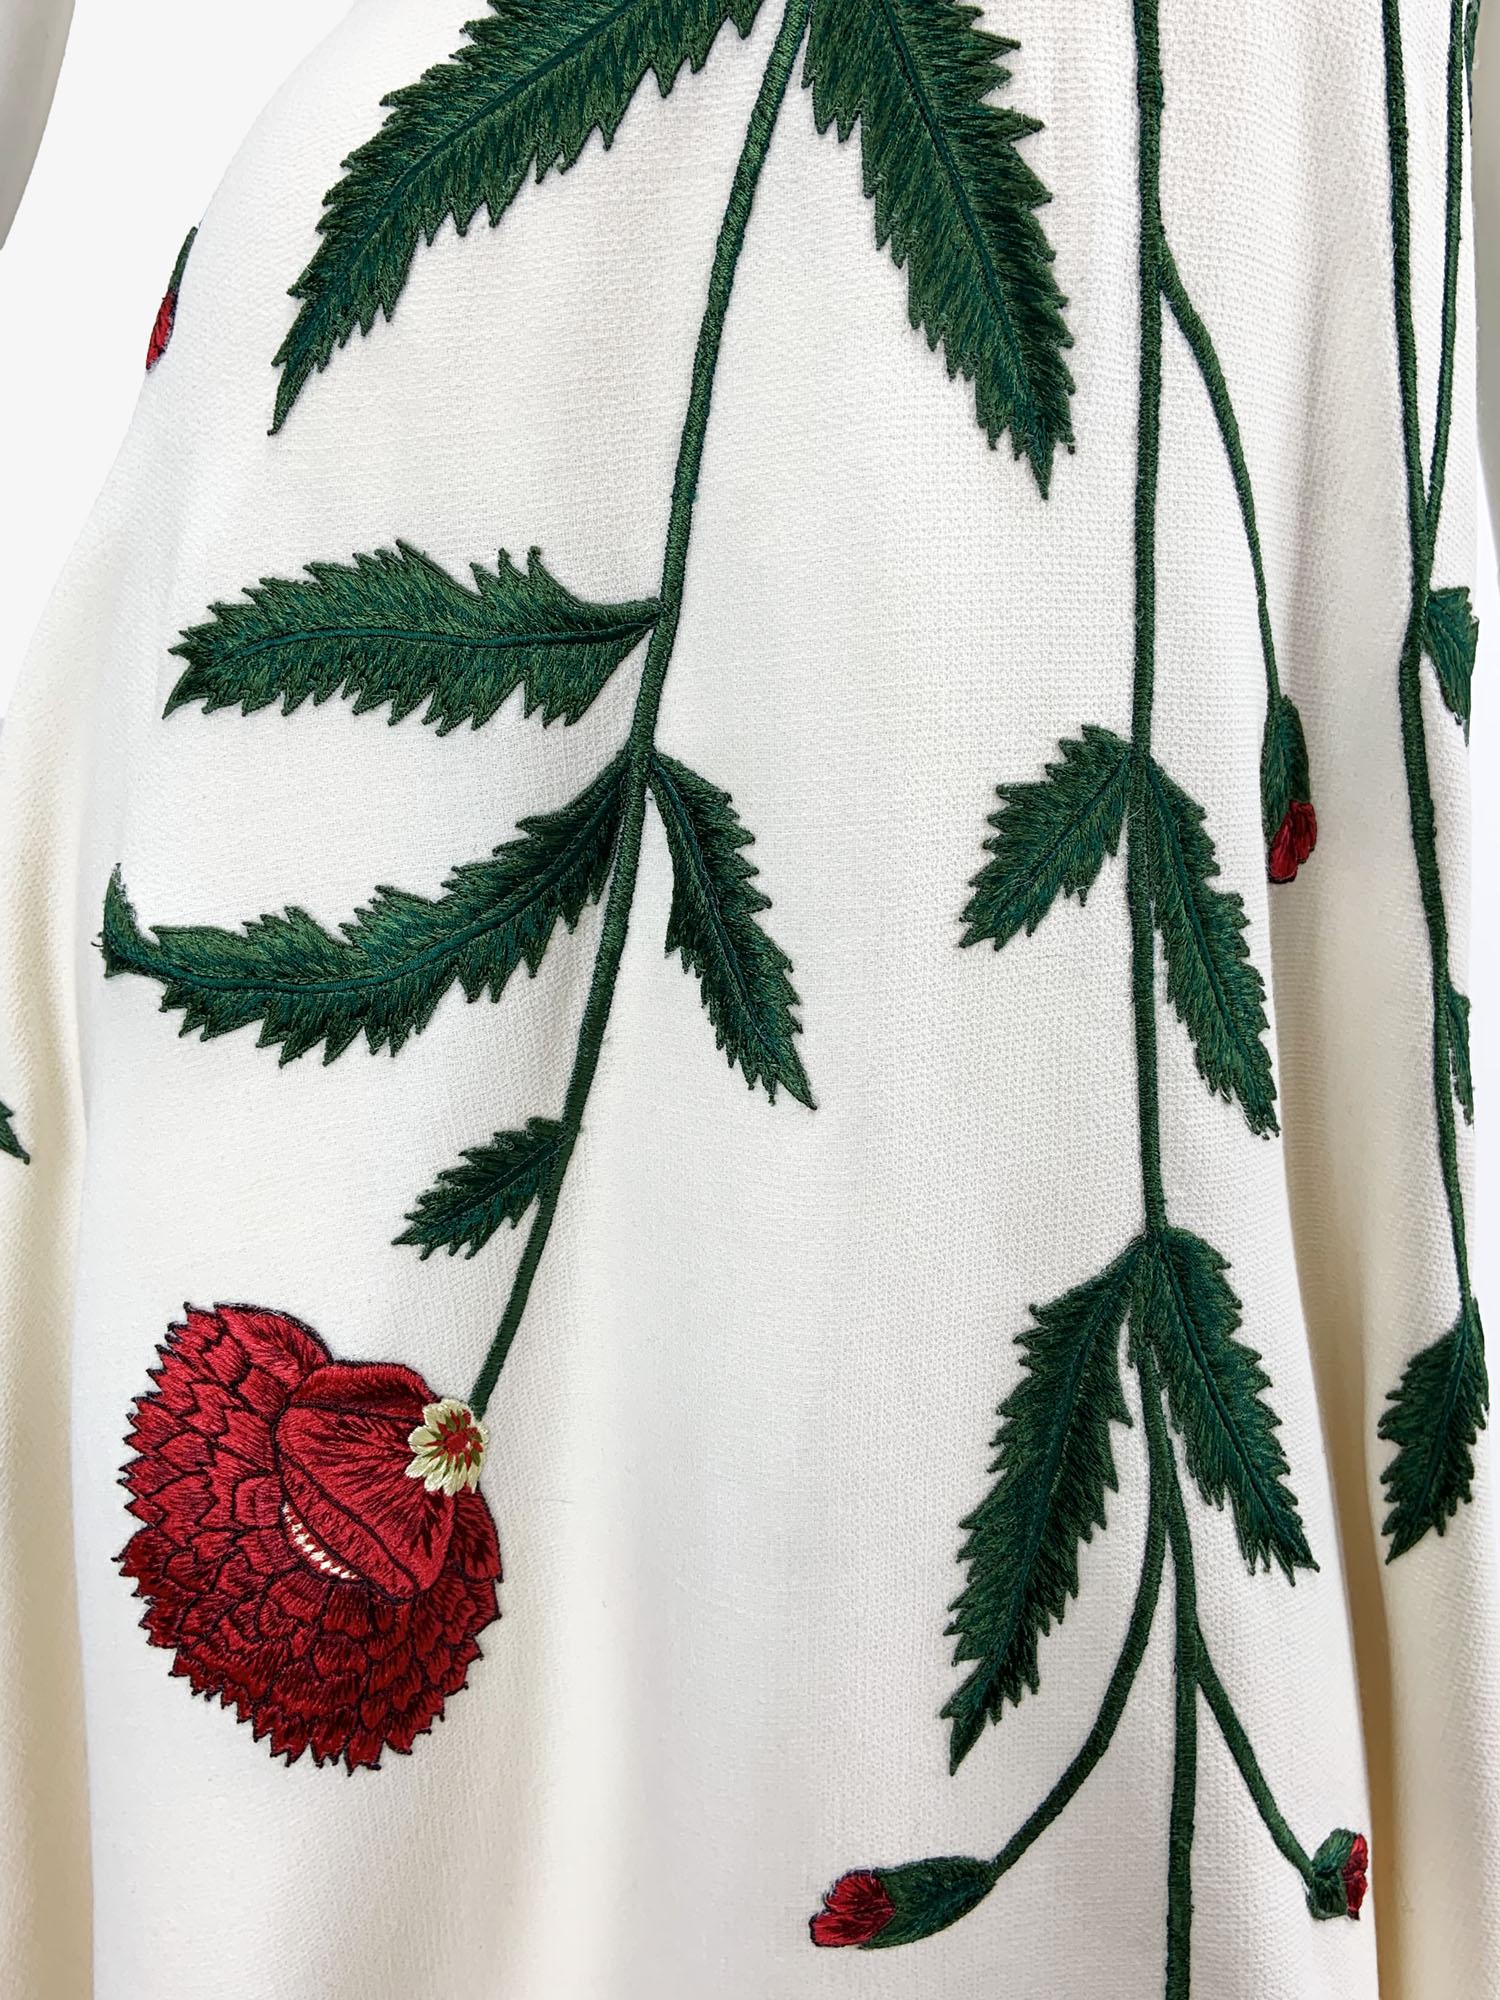 NWT Oscar de la Renta S/S 2019 Poppy Embroidered Stretch-Wool Crepe Dress US 10 For Sale 1